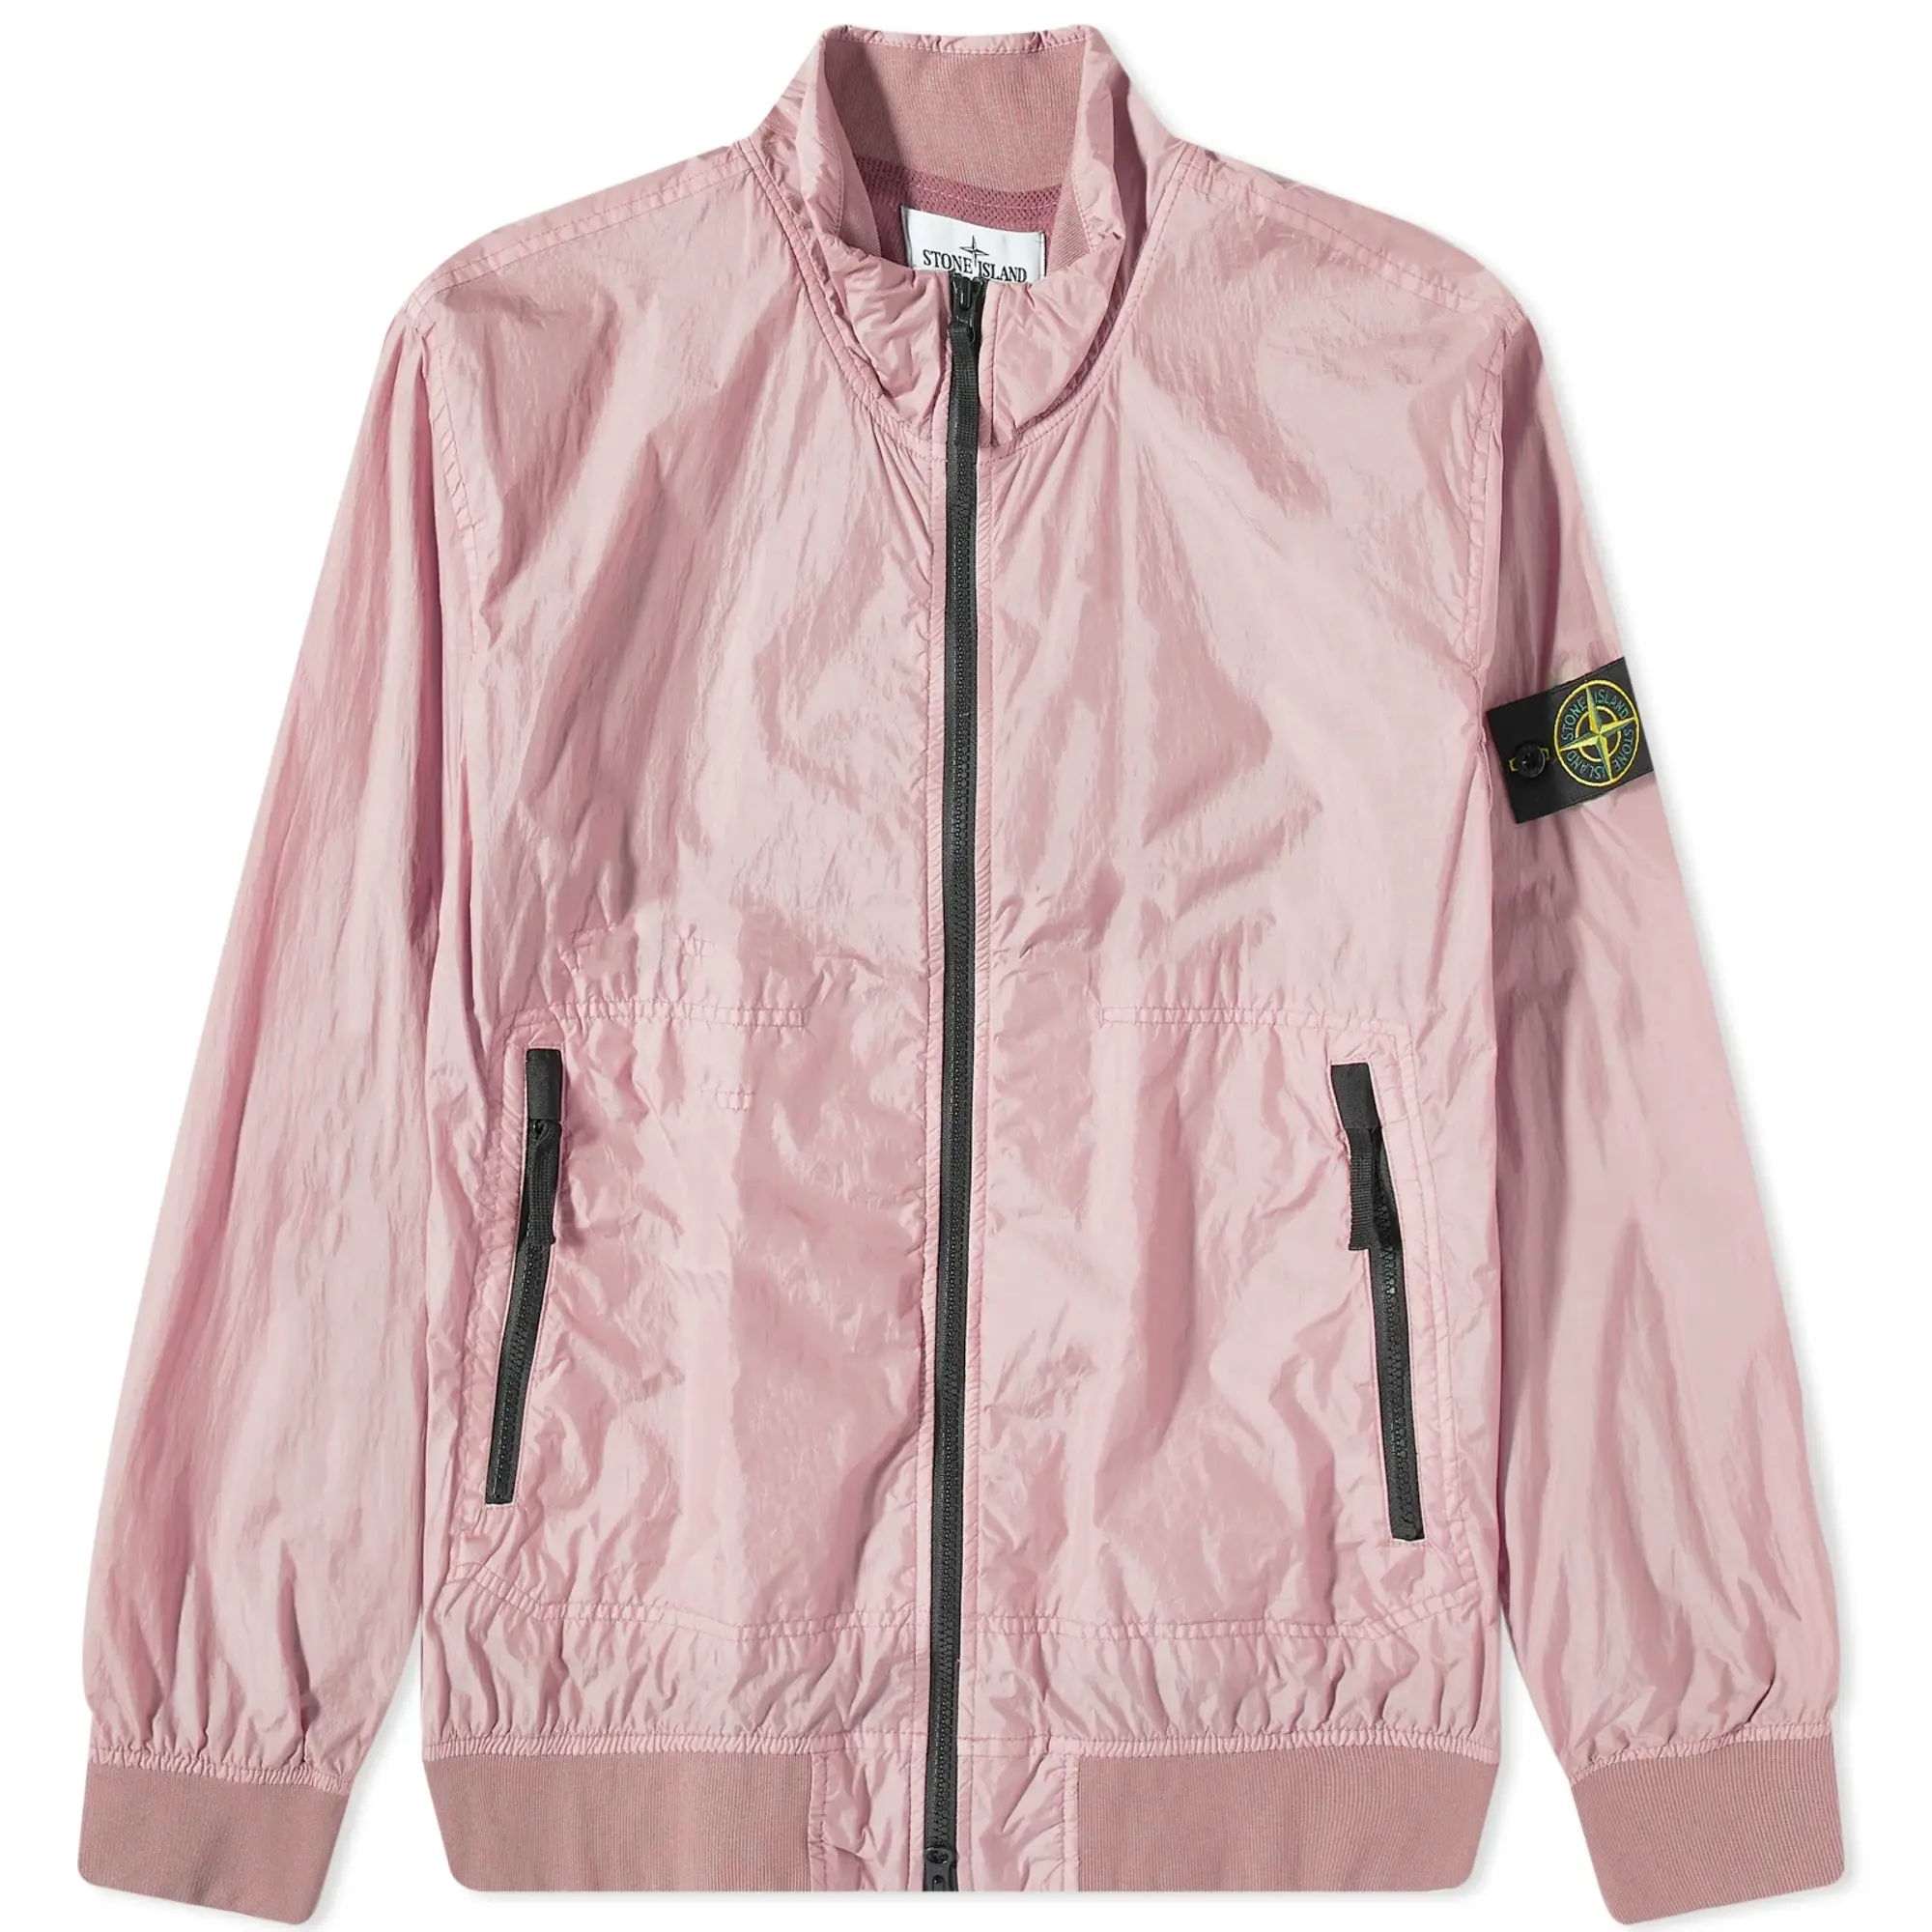 Stone Island Garment Dyed Crinkle Reps NY Jacket - Pink